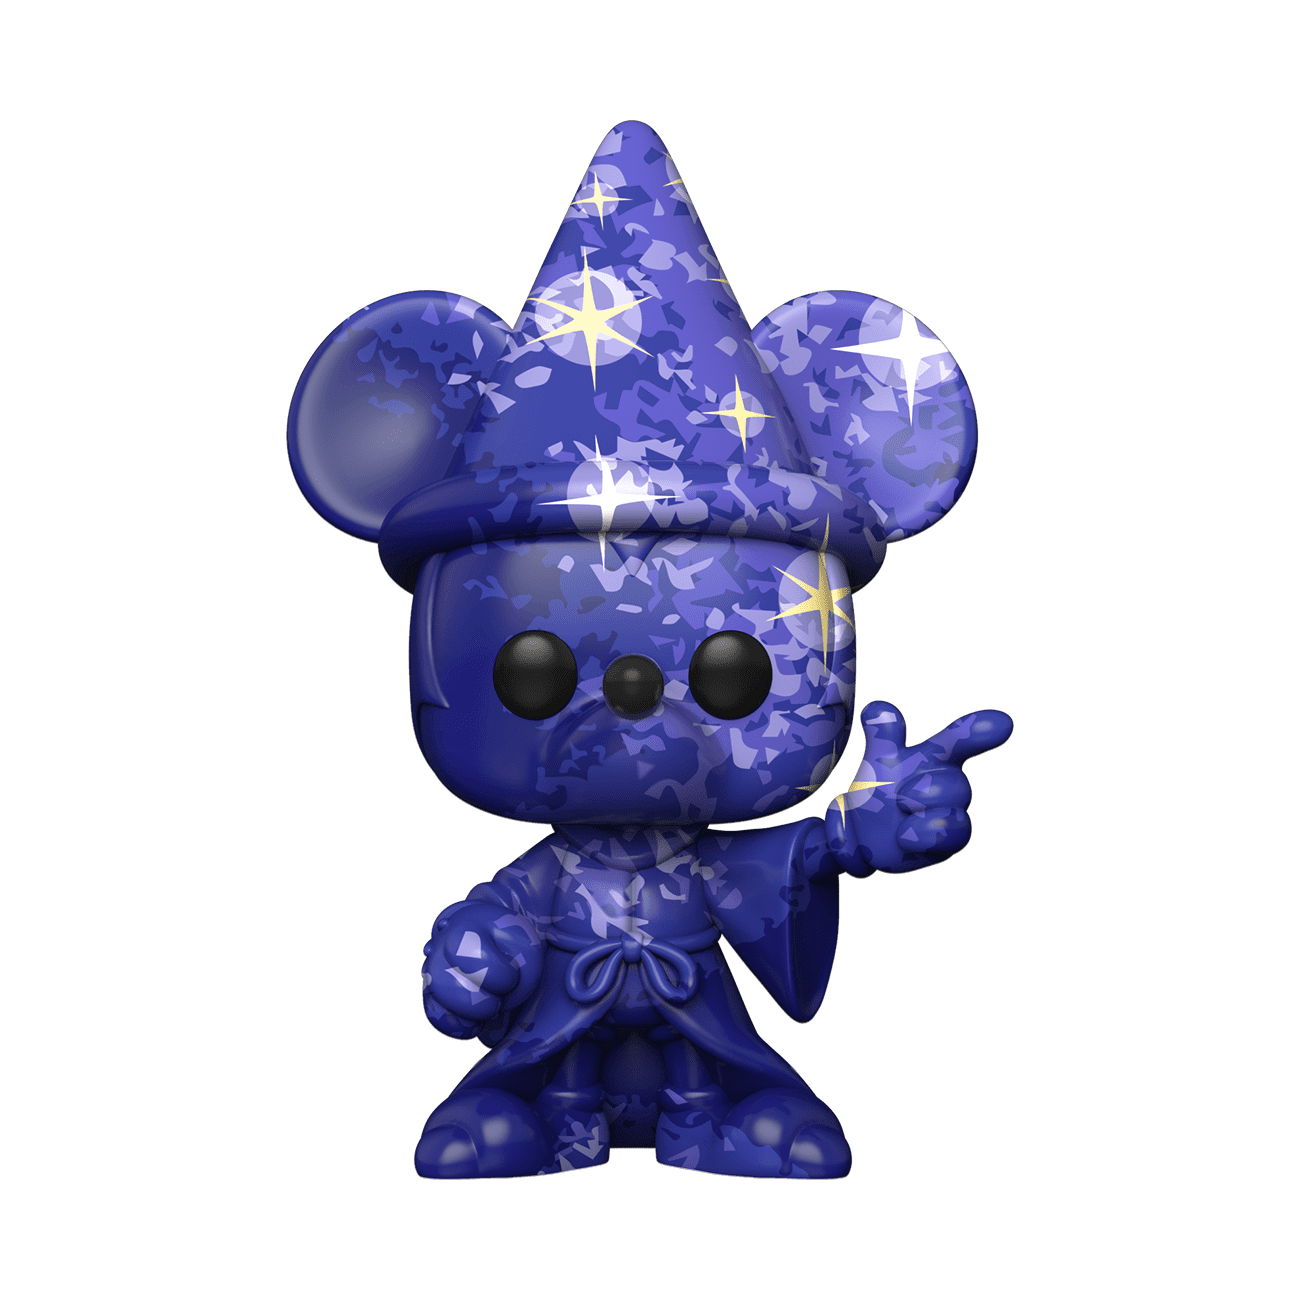 Disney - Mickey Mouse Metallic - POP! Disney action figure 1